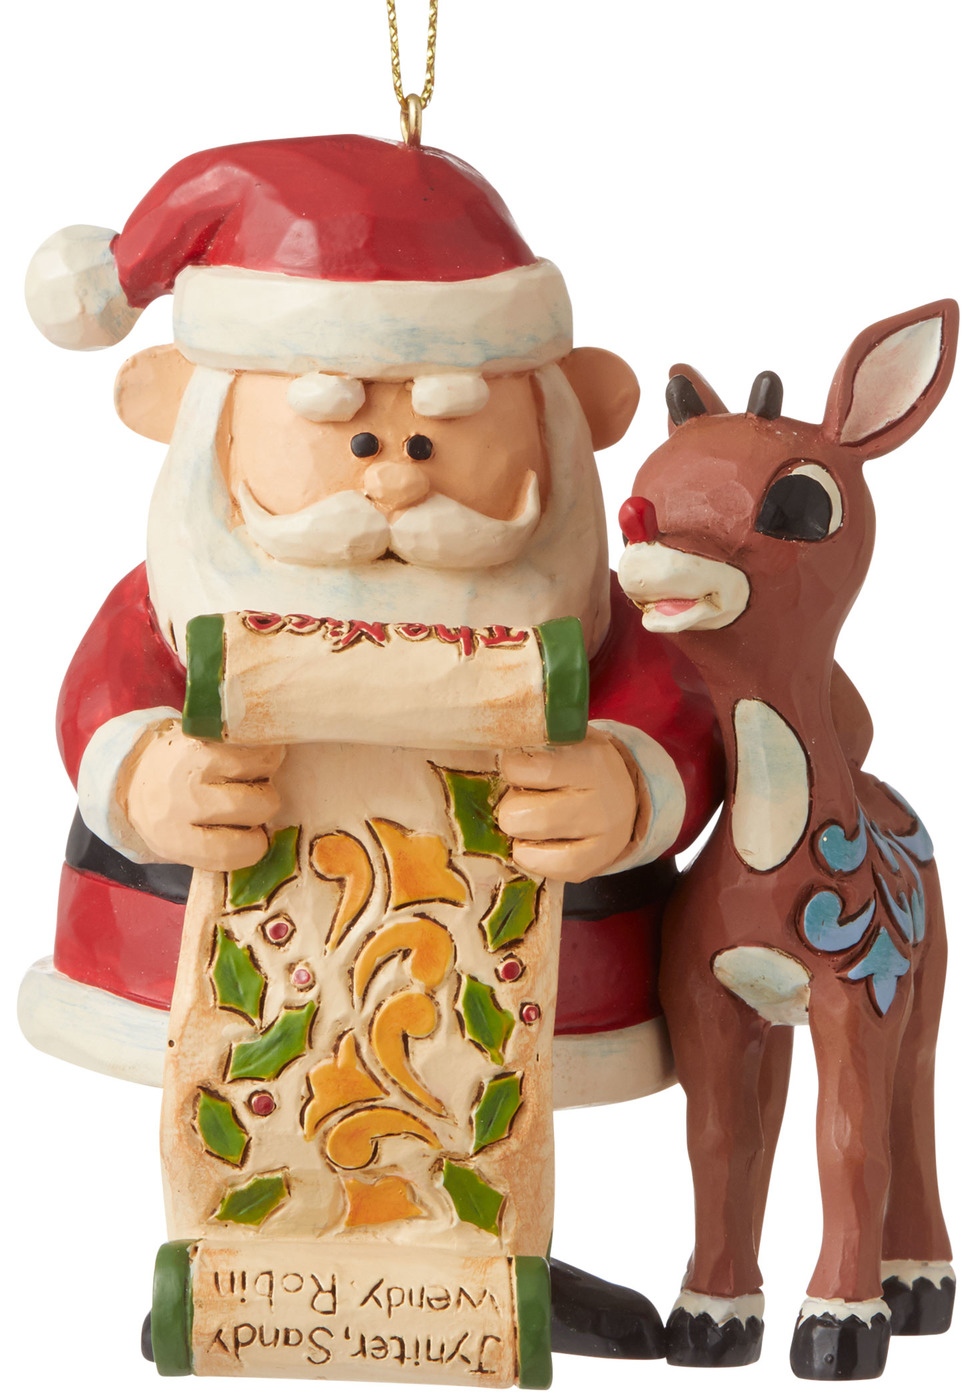 Jim Shore Rudolph Reindeer 6006793 Rudolph and Santa Ornament